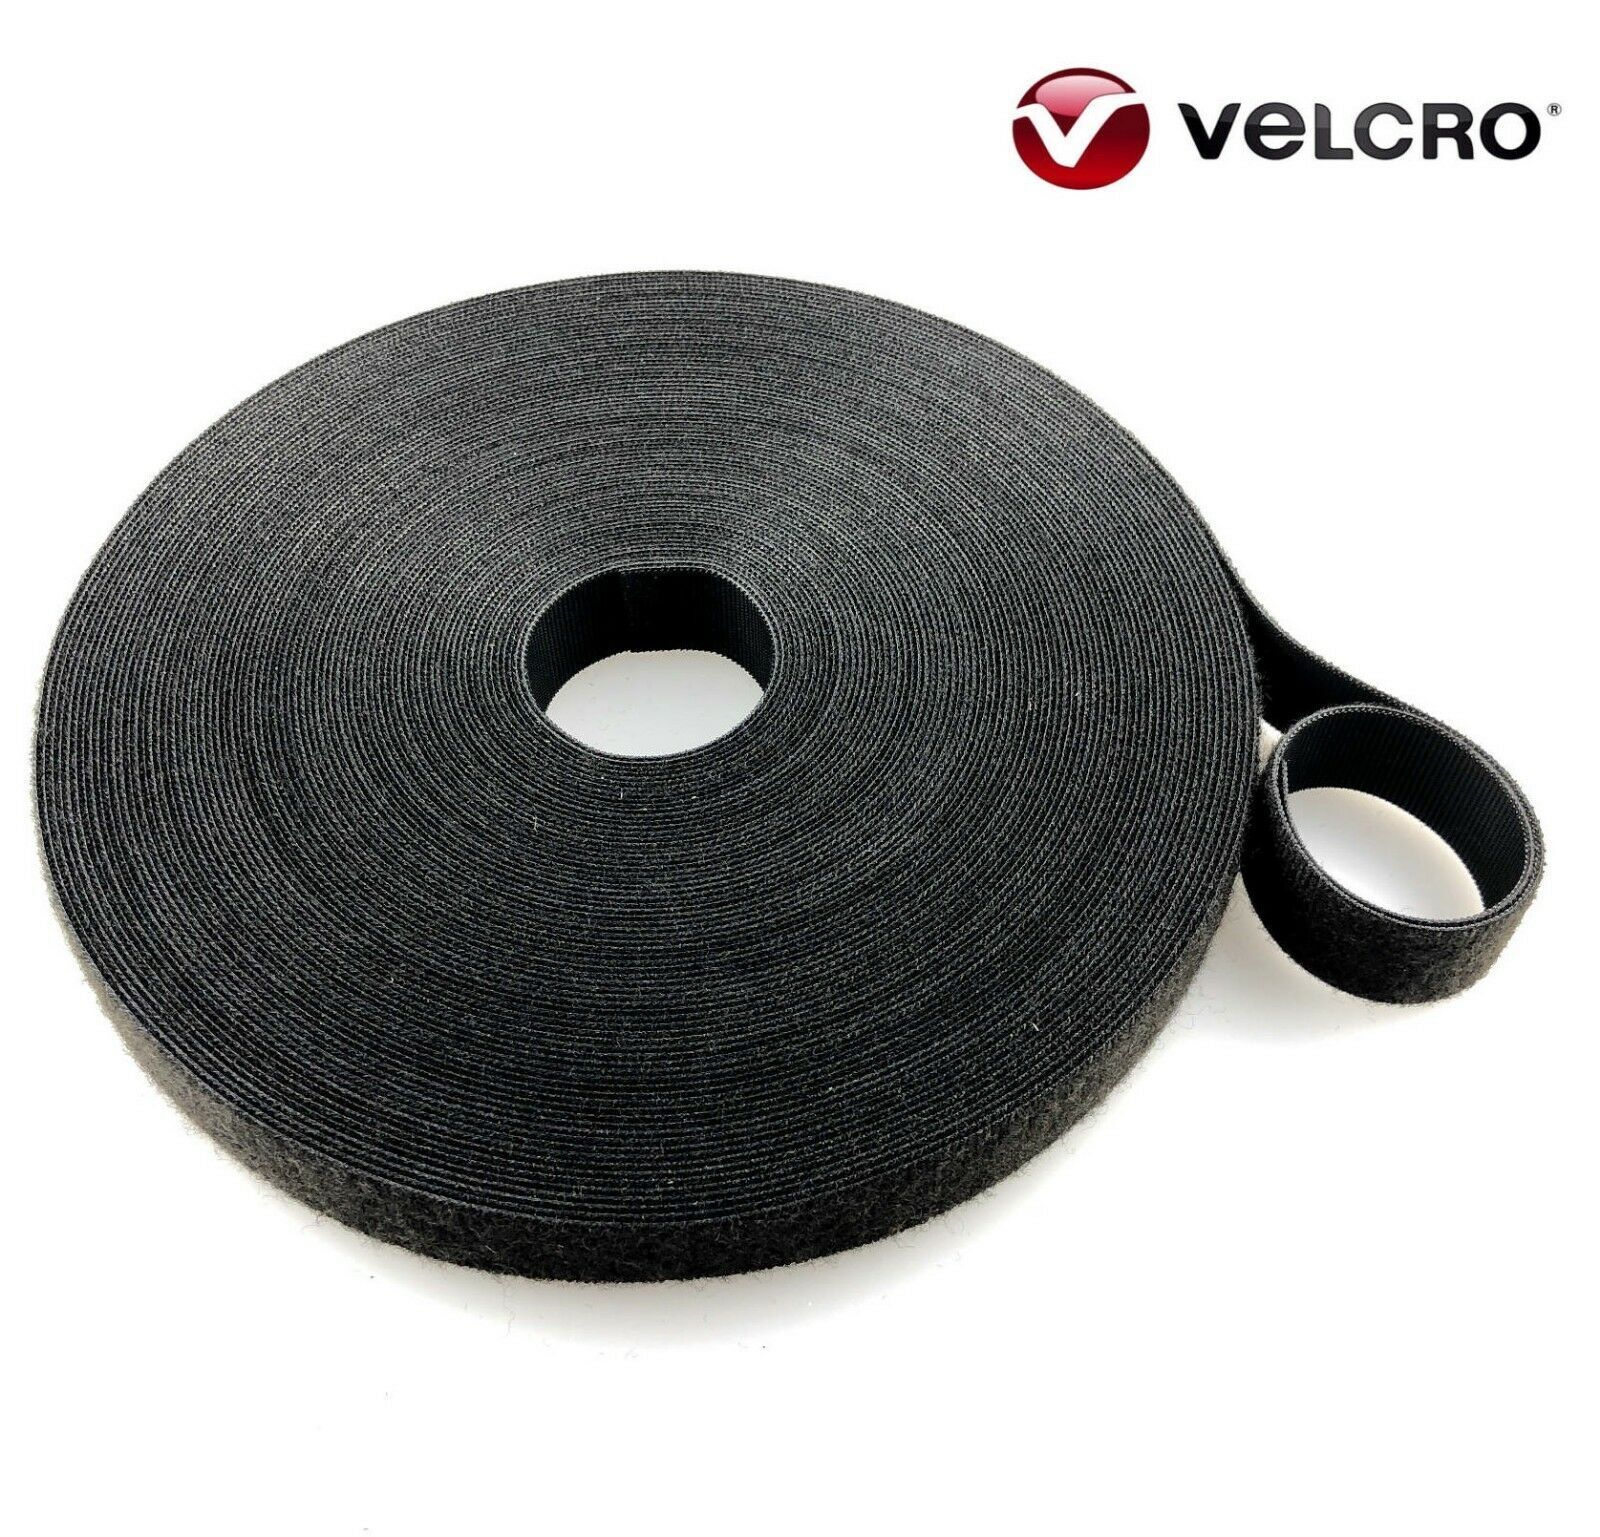 VELCRO® BRAND ONE-WRAP® 10 FOOT ROLL - SELF GRIPPING STRAP - CHOOSE WIDTH